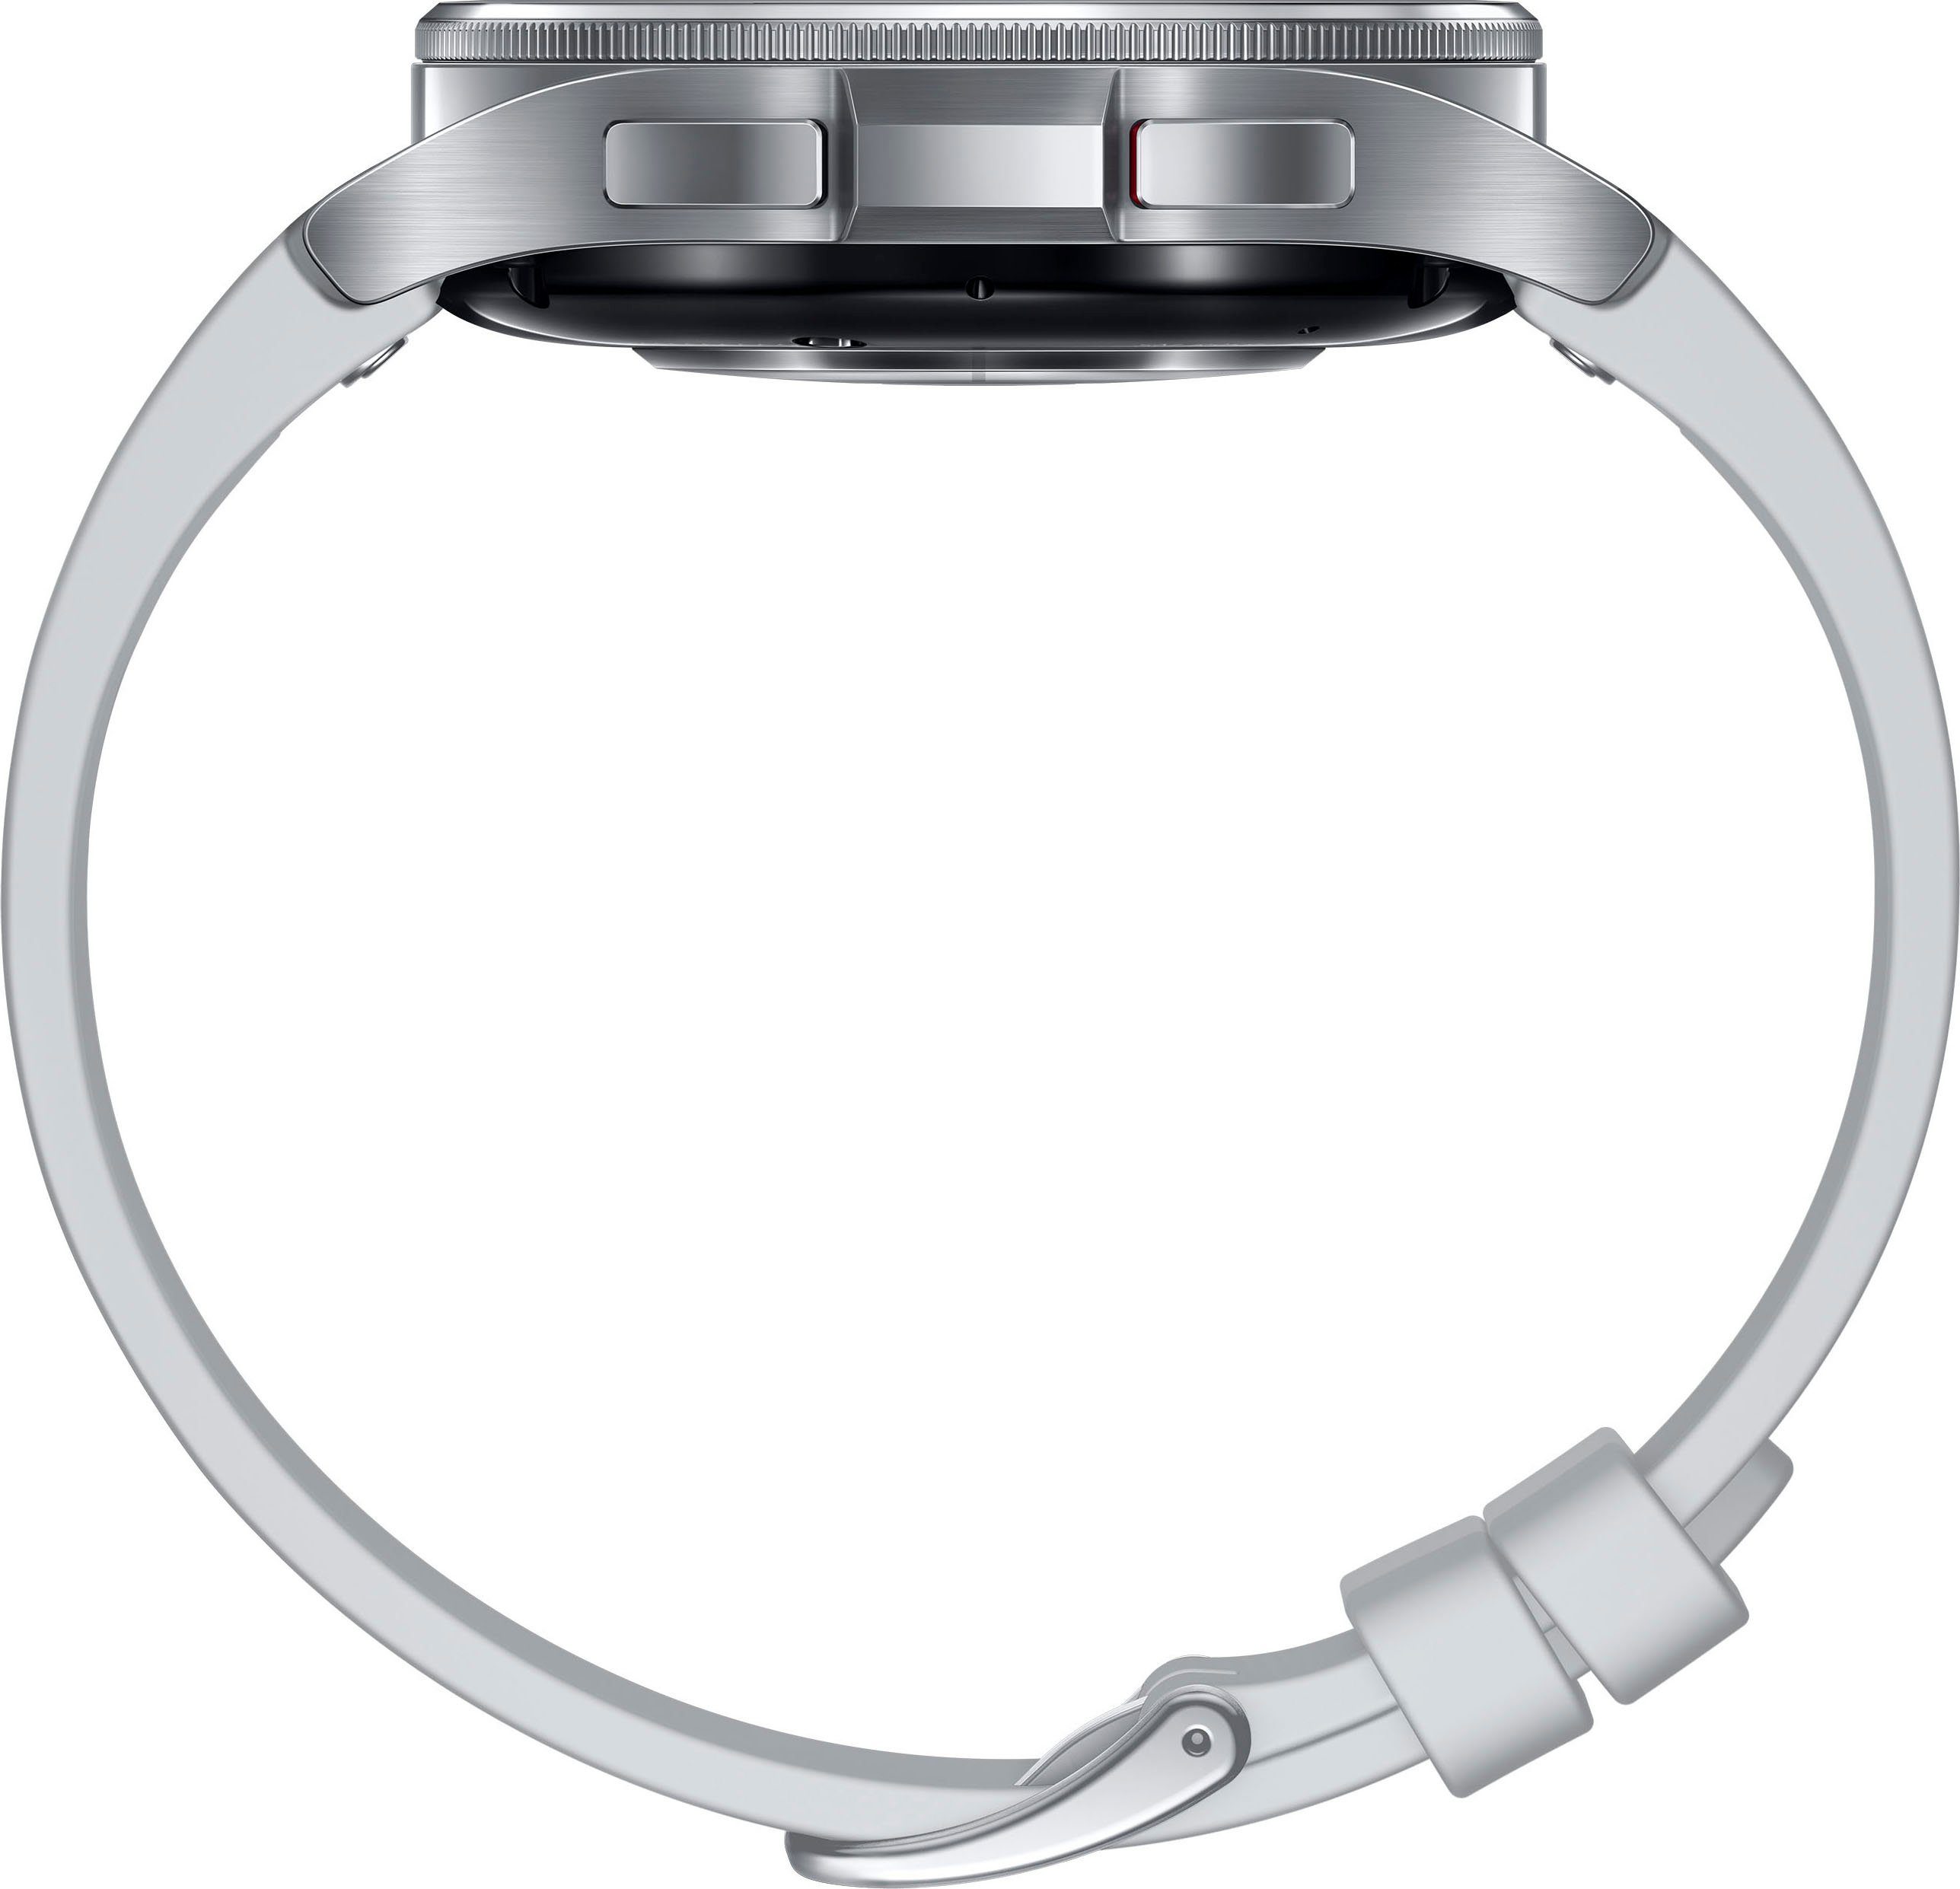 Samsung Galaxy by Zoll, | Wear (3,33 Smartwatch Classic silber cm/1,3 LTE OS Samsung) 43mm Watch 6 silber